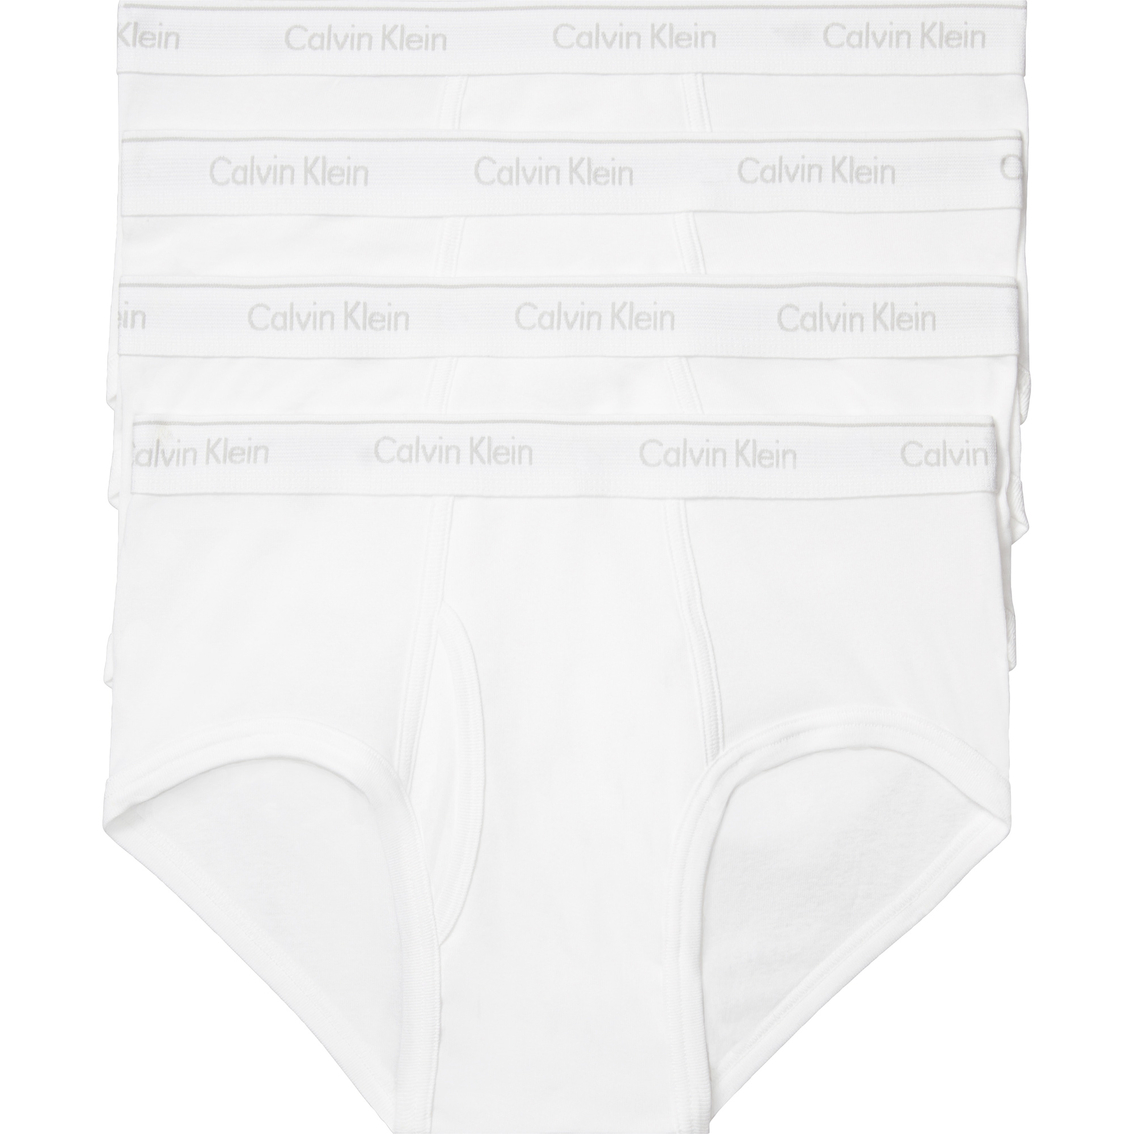 Calvin Klein Cotton Classic Plastic Printed Box Briefs 4 pk. - Image 2 of 2